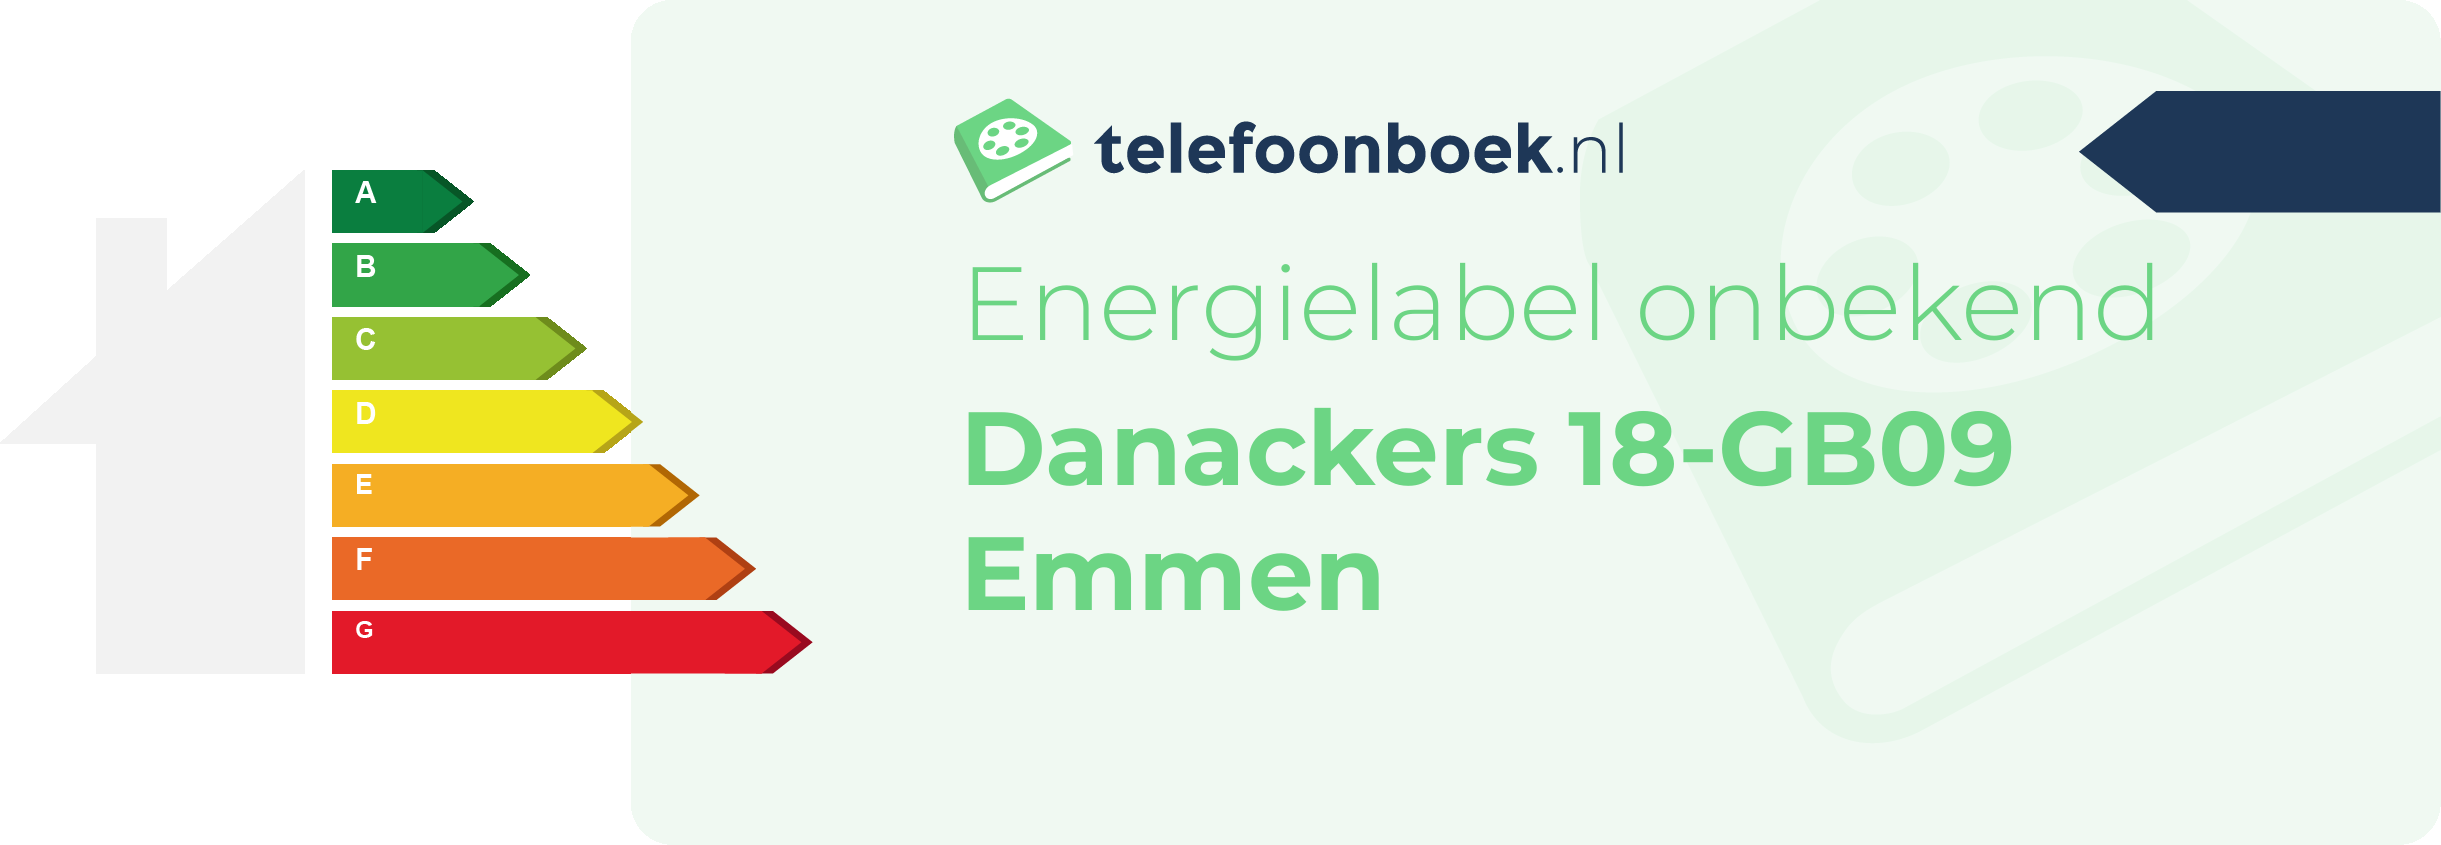 Energielabel Danackers 18-GB09 Emmen